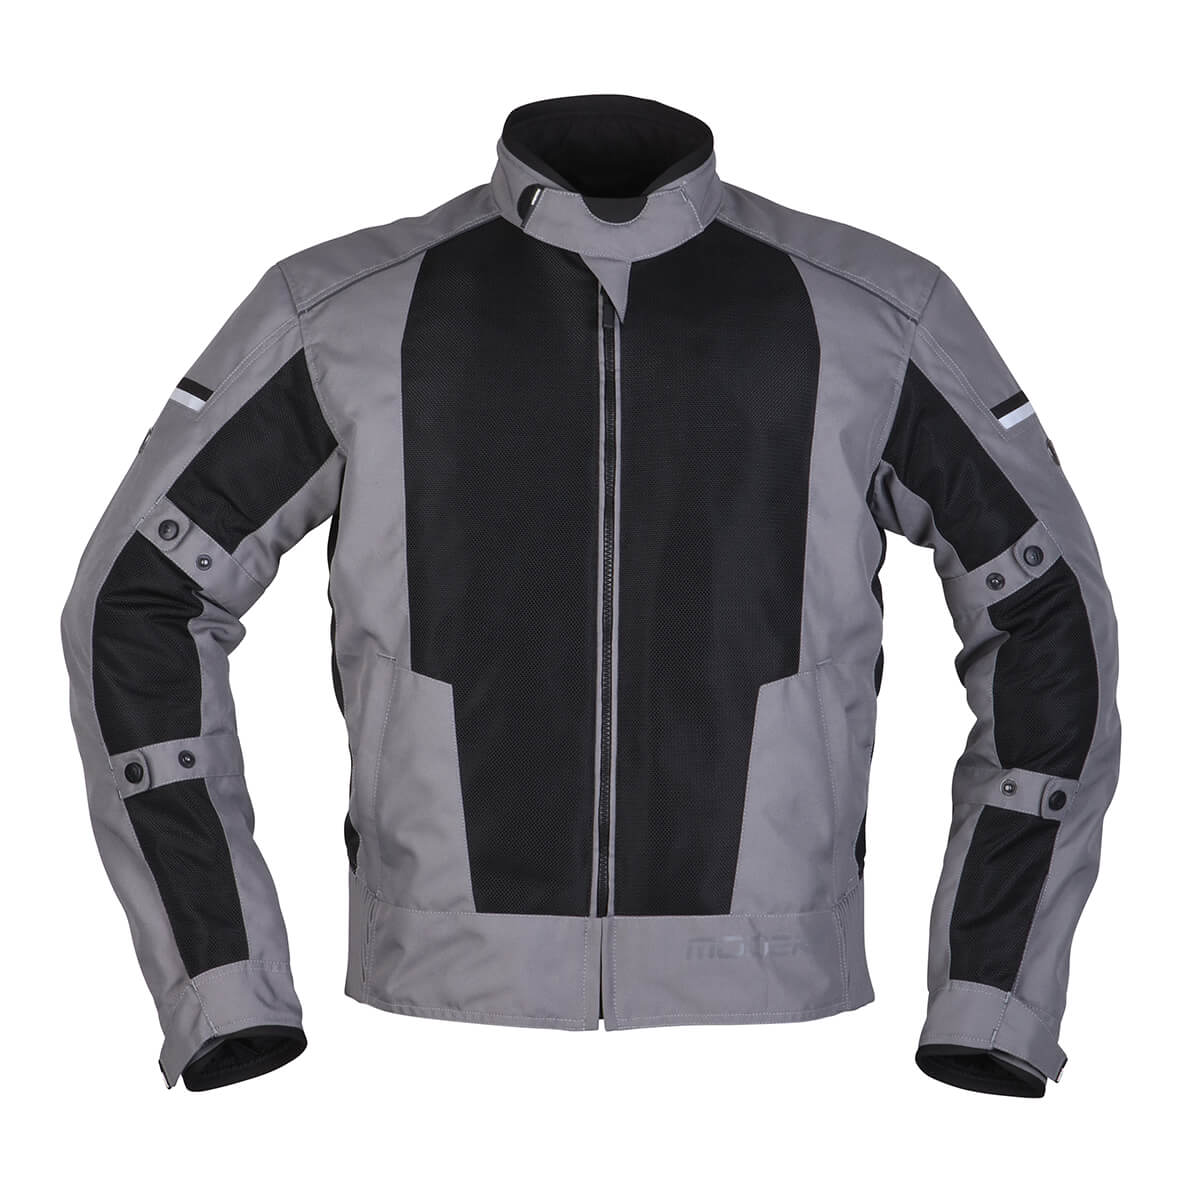 Image of Modeka Veo Air Jacket Black Gray Size 5XL ID 4045765189900